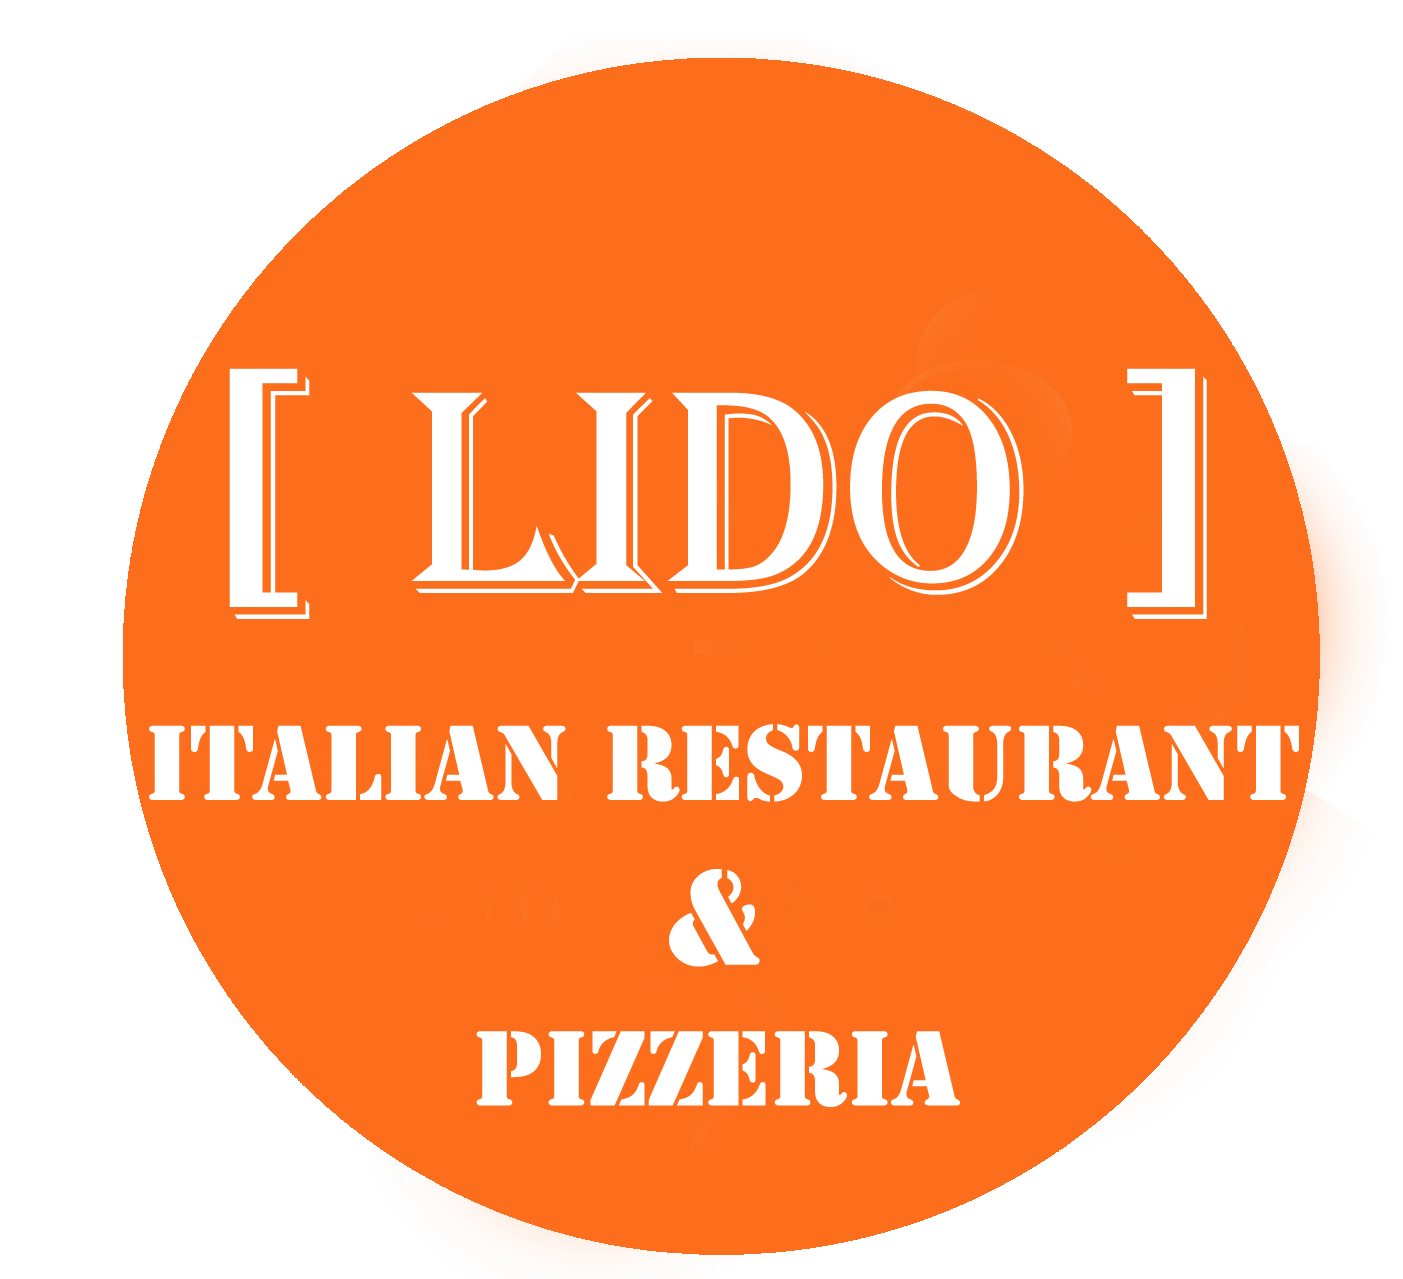 LIDO ITALIAN RESTAURANT & PIZZERIA